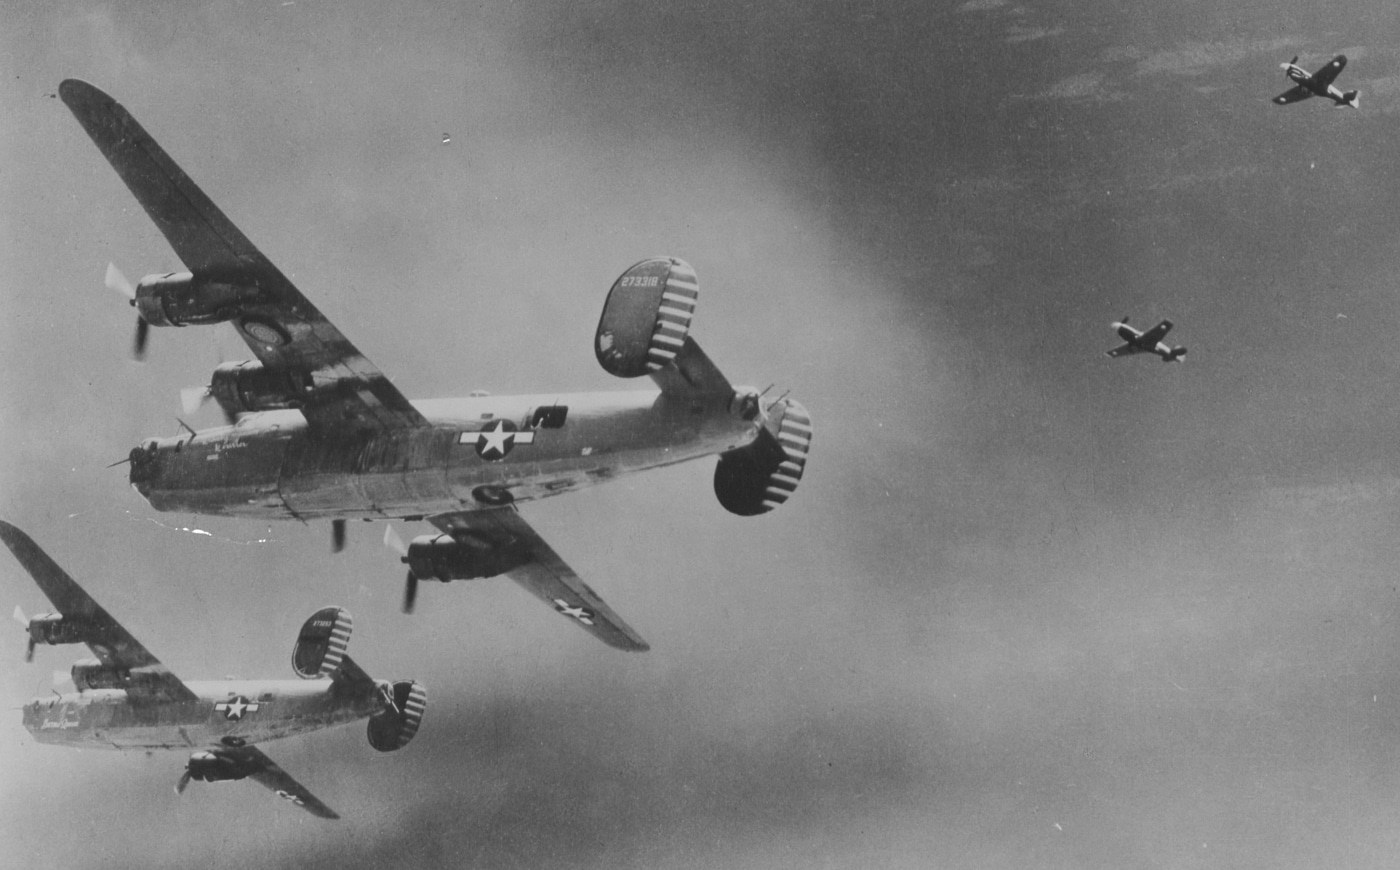 P-40 fighters escort B-24 bombers